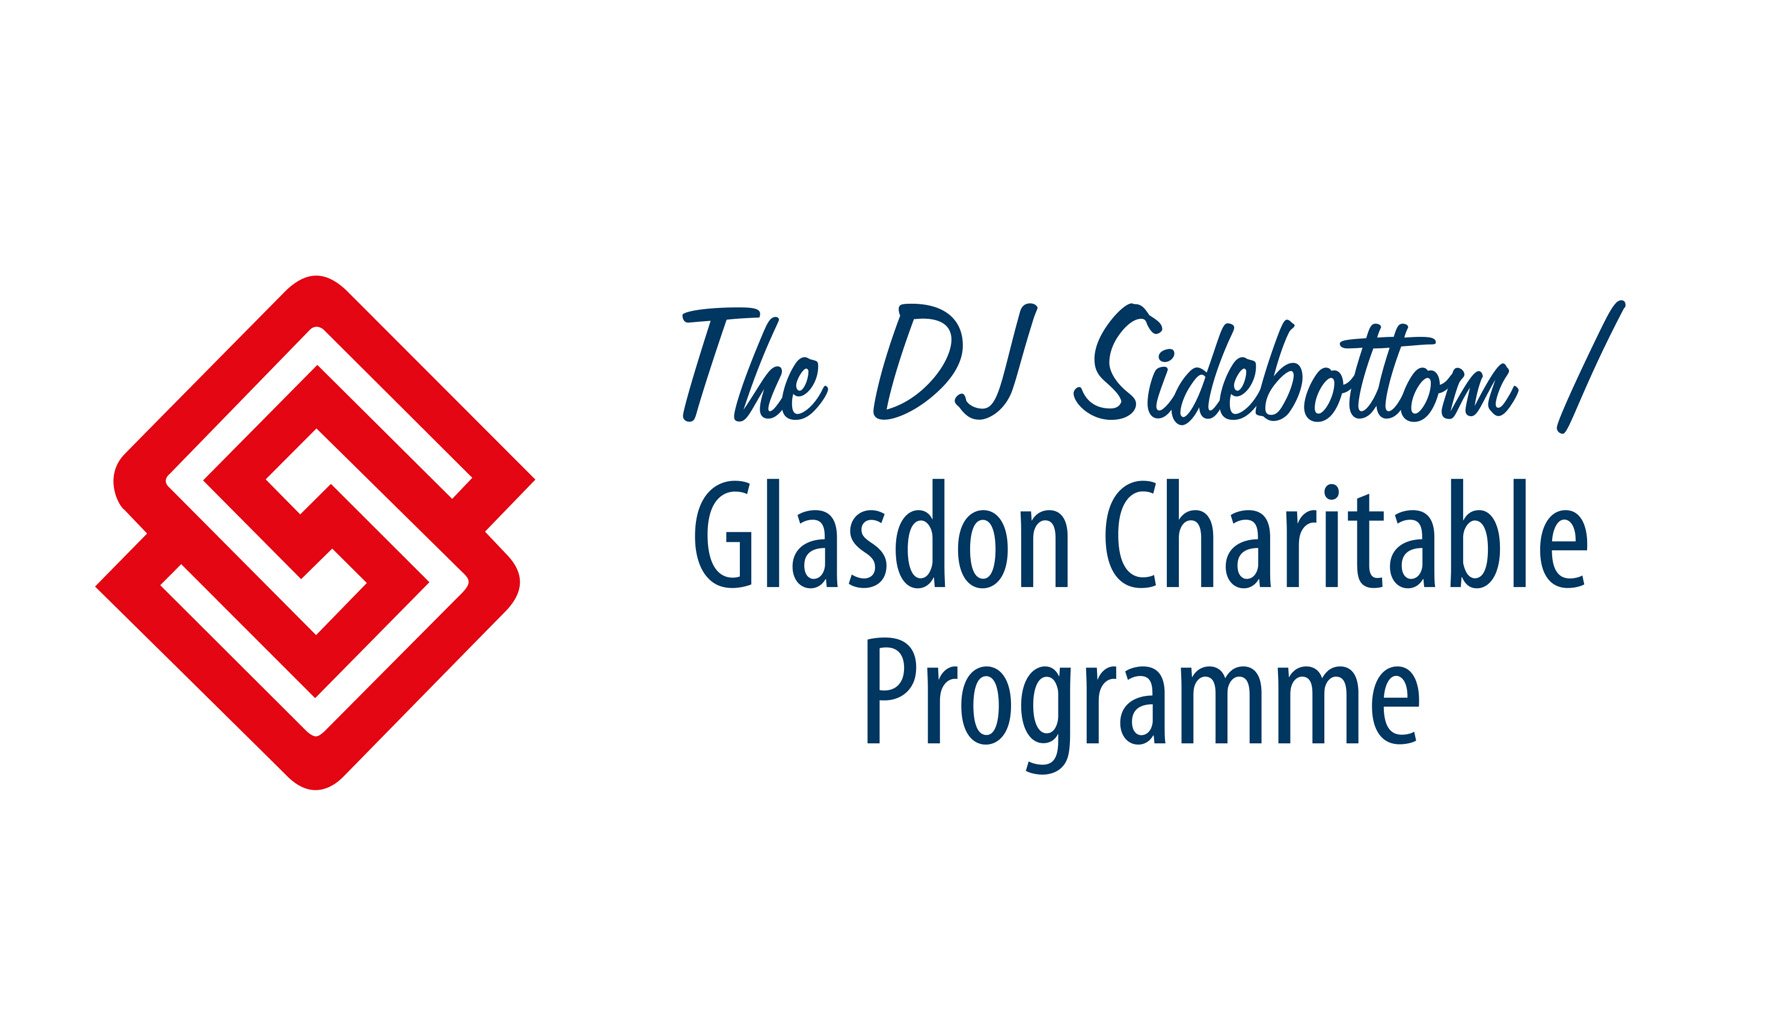 The DJ Sidebottom - Glasdon Charitable Programme